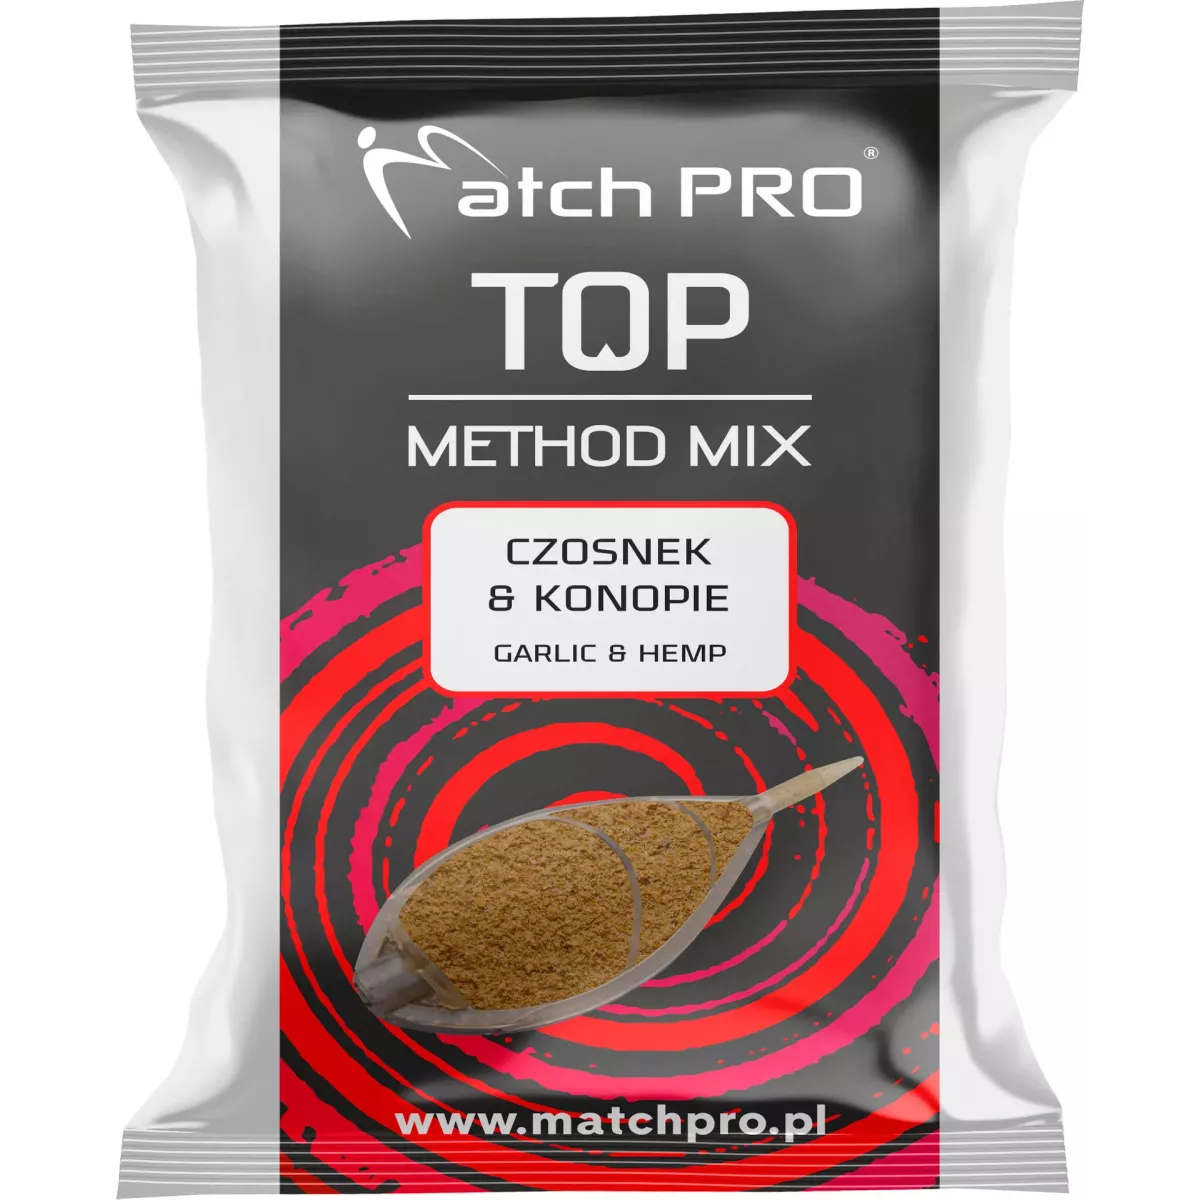 Zanęta MatchPro Method Mix TOP 700g - CZOSNEK & KONOPIE